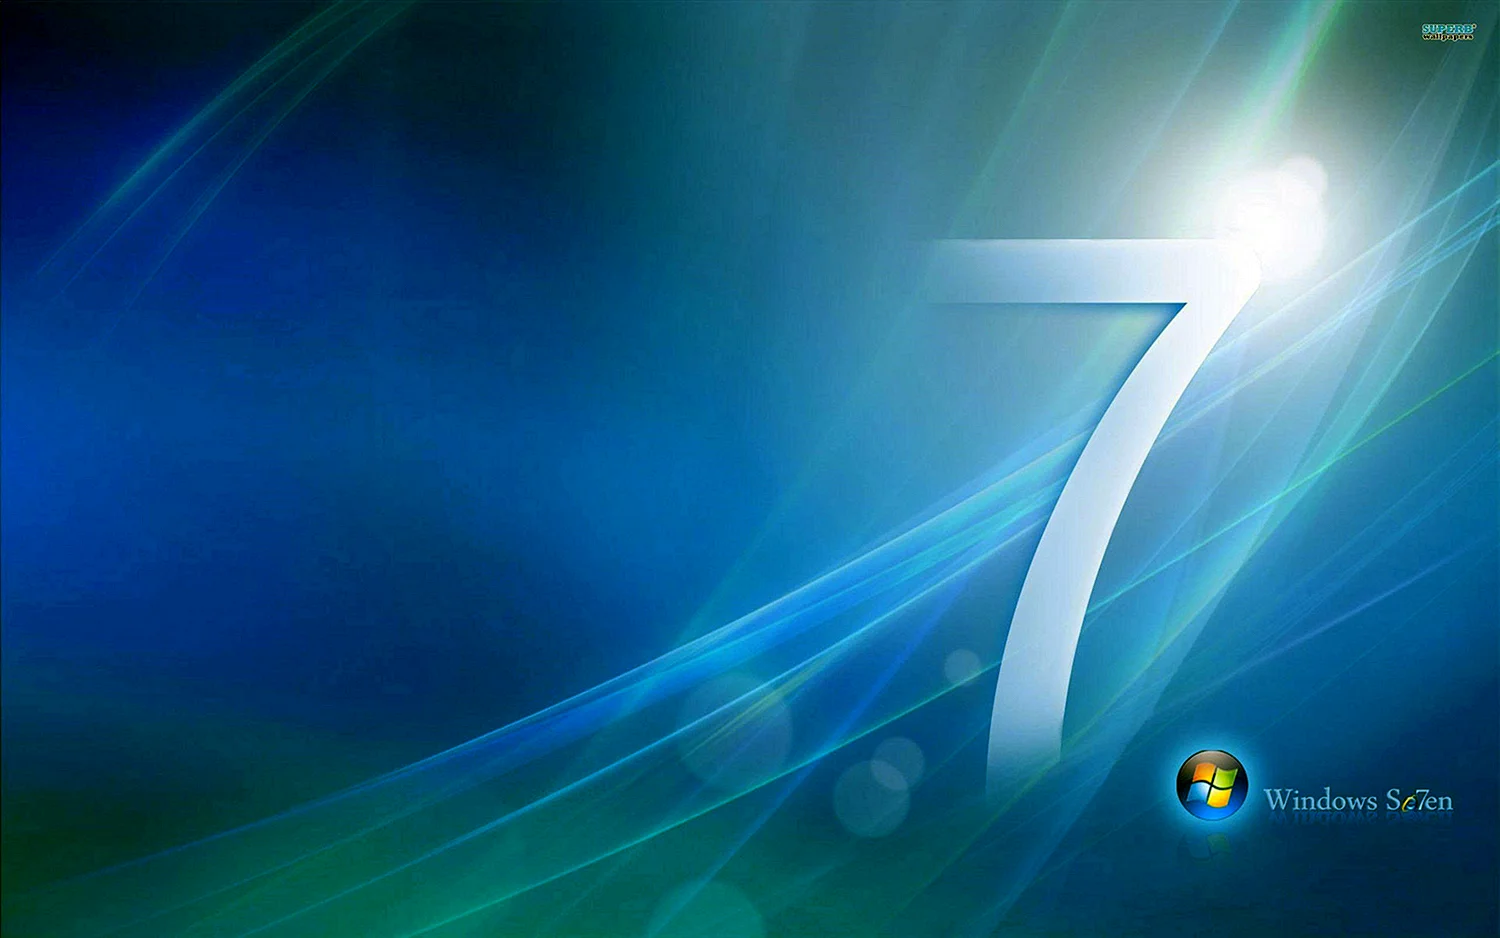 Windows 7 Azure logo